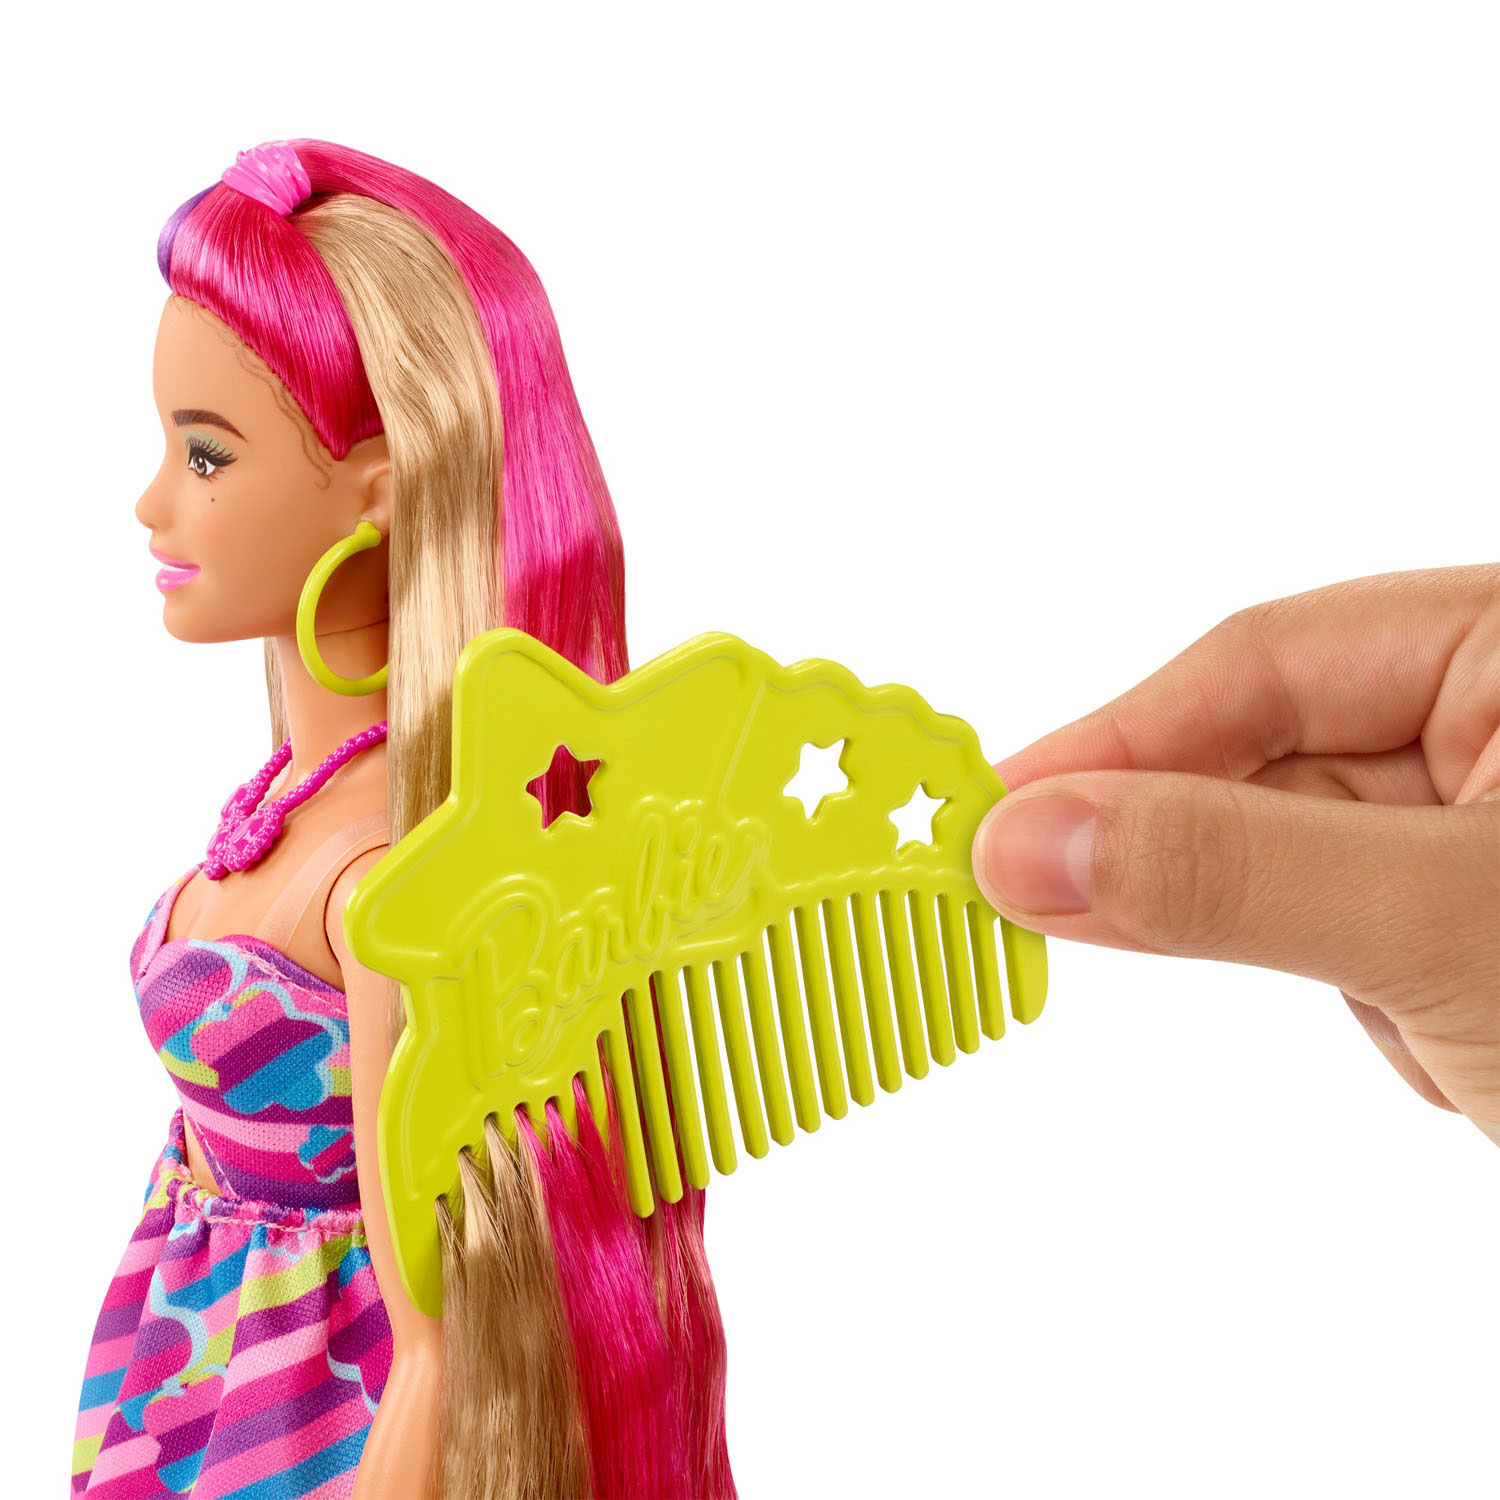 Barbie Totally Hair Pop 2 - Flower